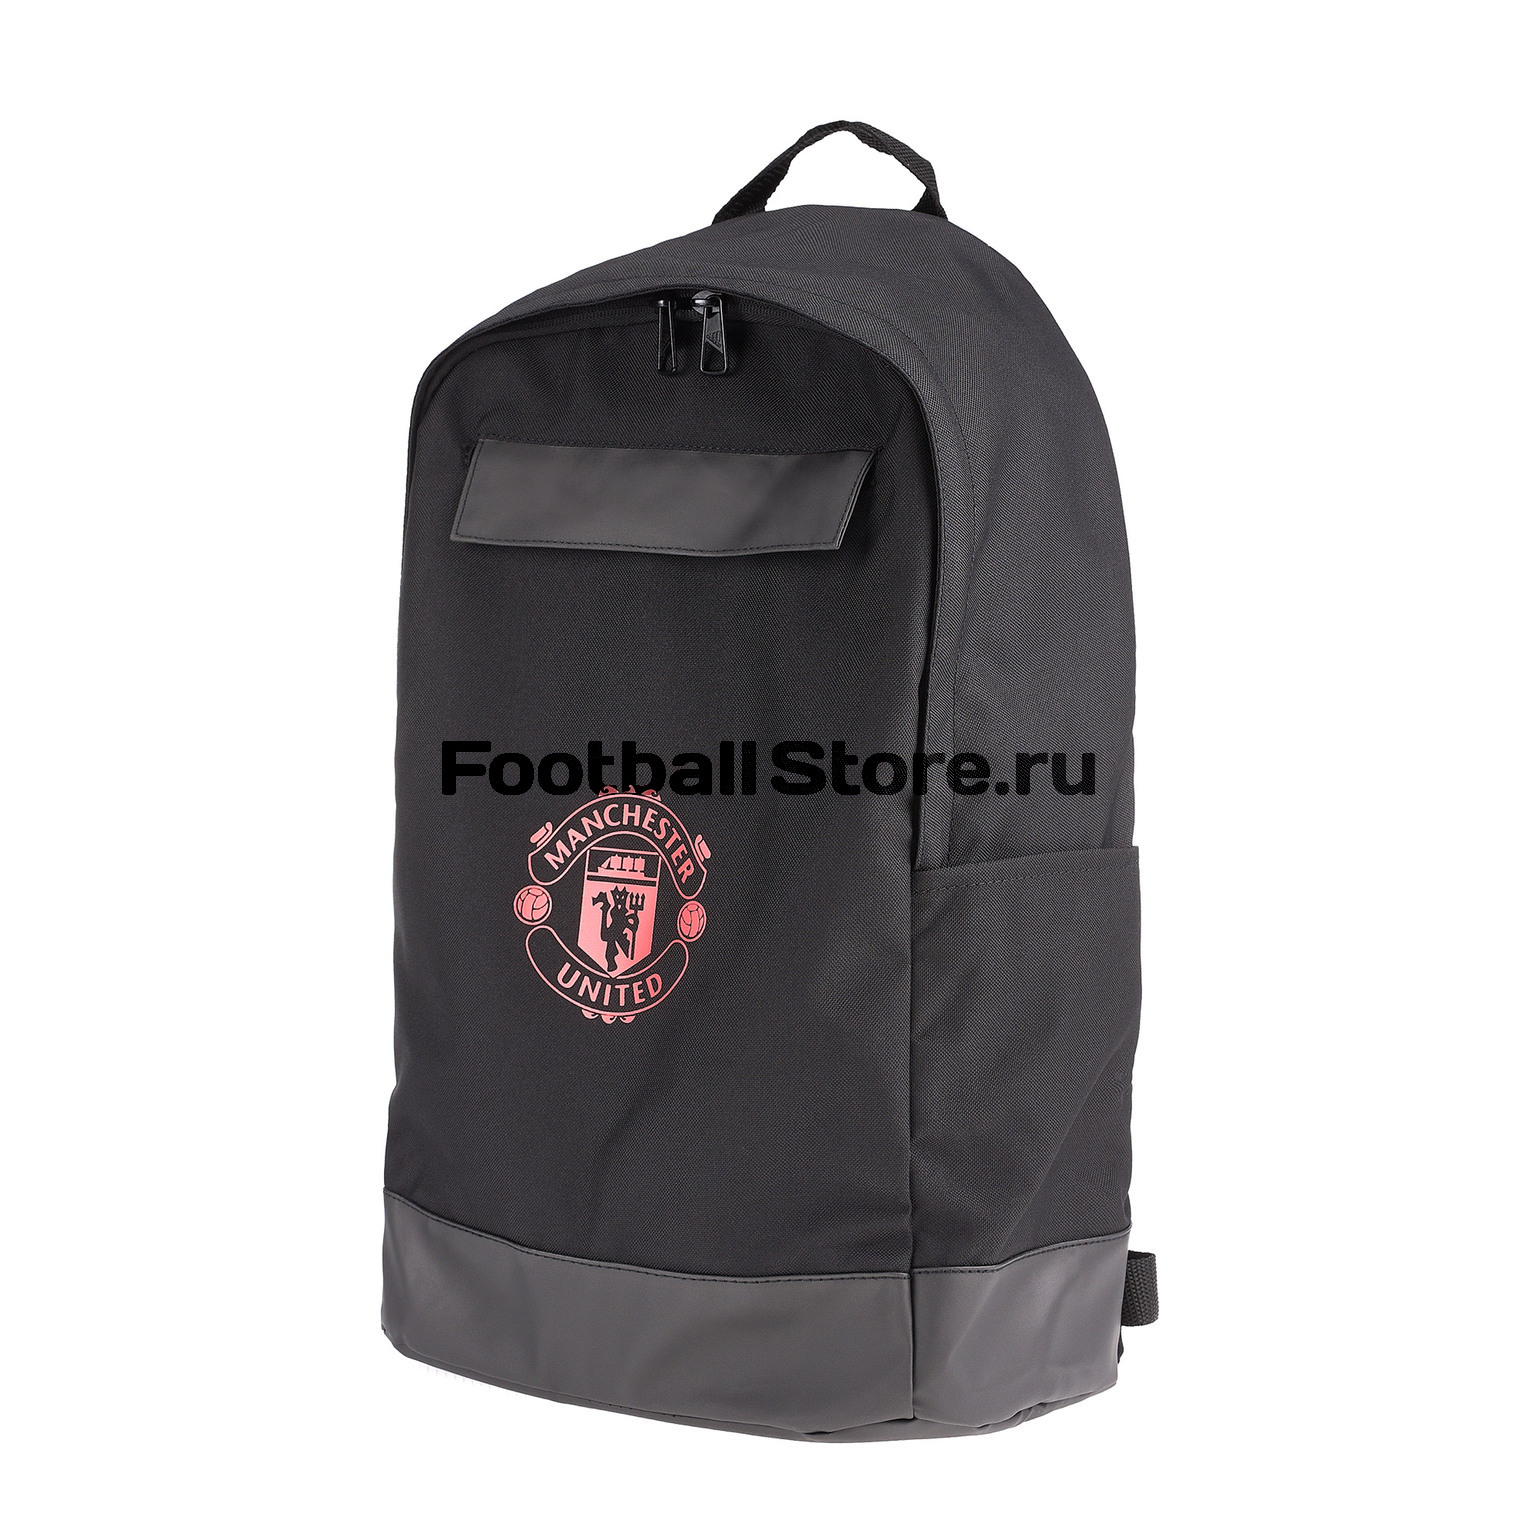 Рюкзак Adidas Manchester United CY5583